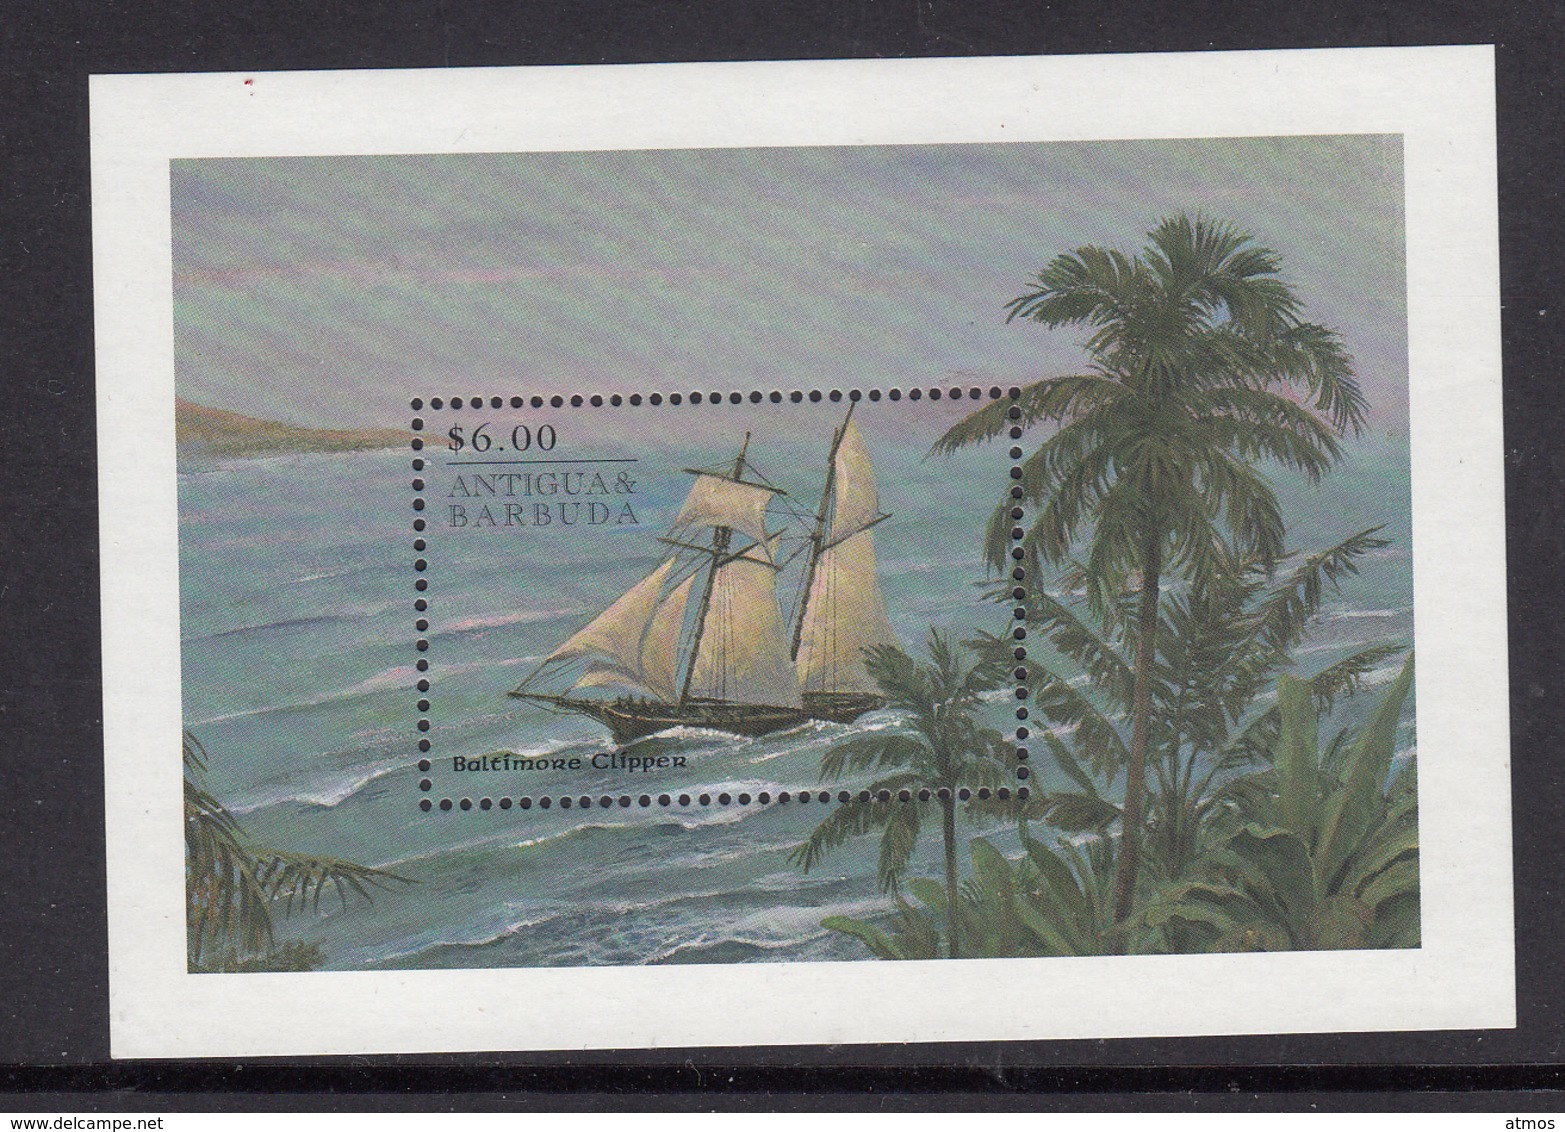 Antiqua & Barbuda MNH Michel Nr Block 398 From 1998 / Catw 5.50 EUR - Antigua En Barbuda (1981-...)